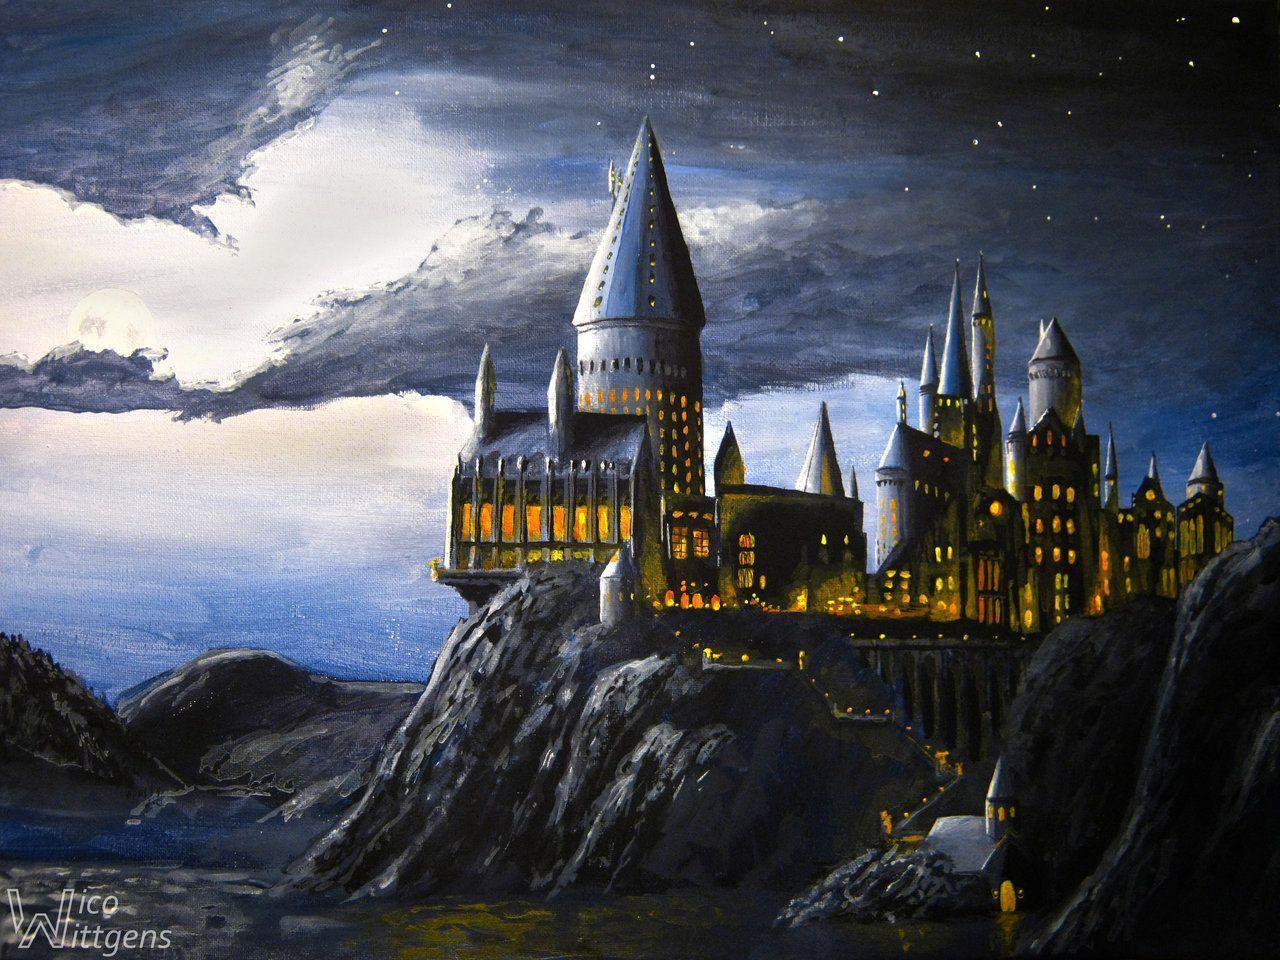 Gallery For gt Hogwarts Wallpaper Hd